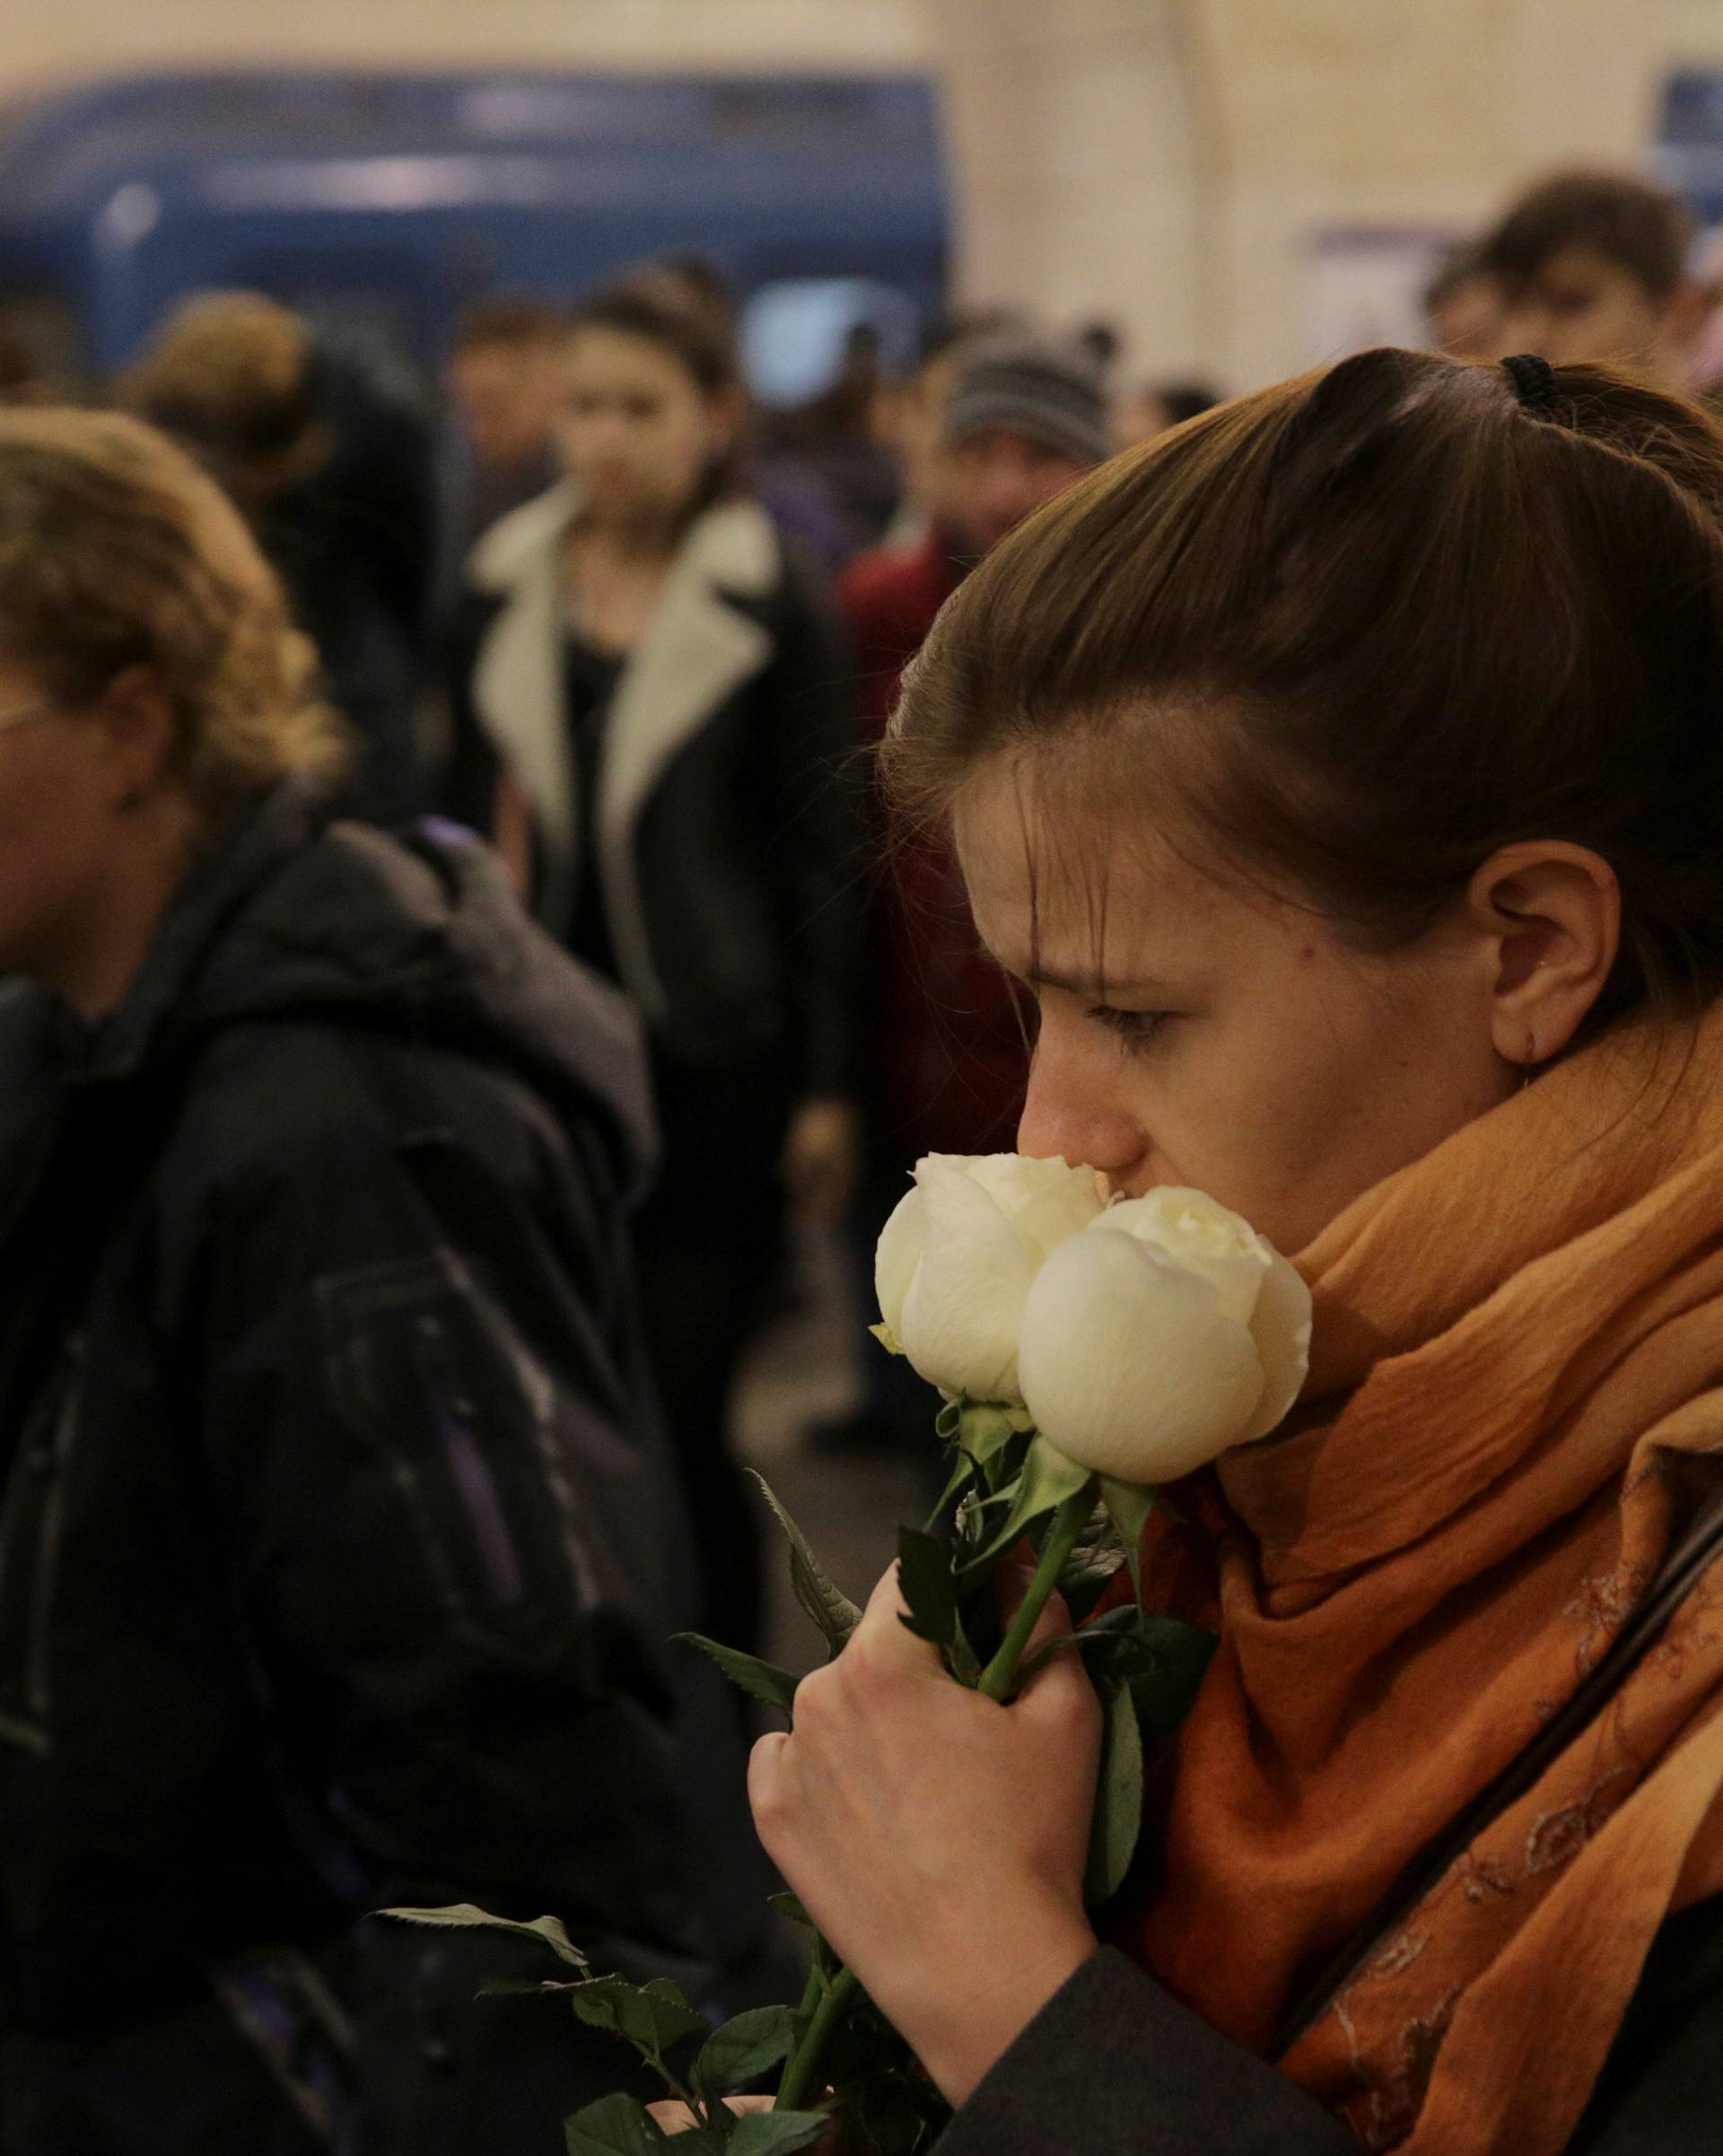 People hold flowers as they mourn for victims of blast in St. Petersburg metro at Tekhnologicheskiy institut metro station in St. Petersburg